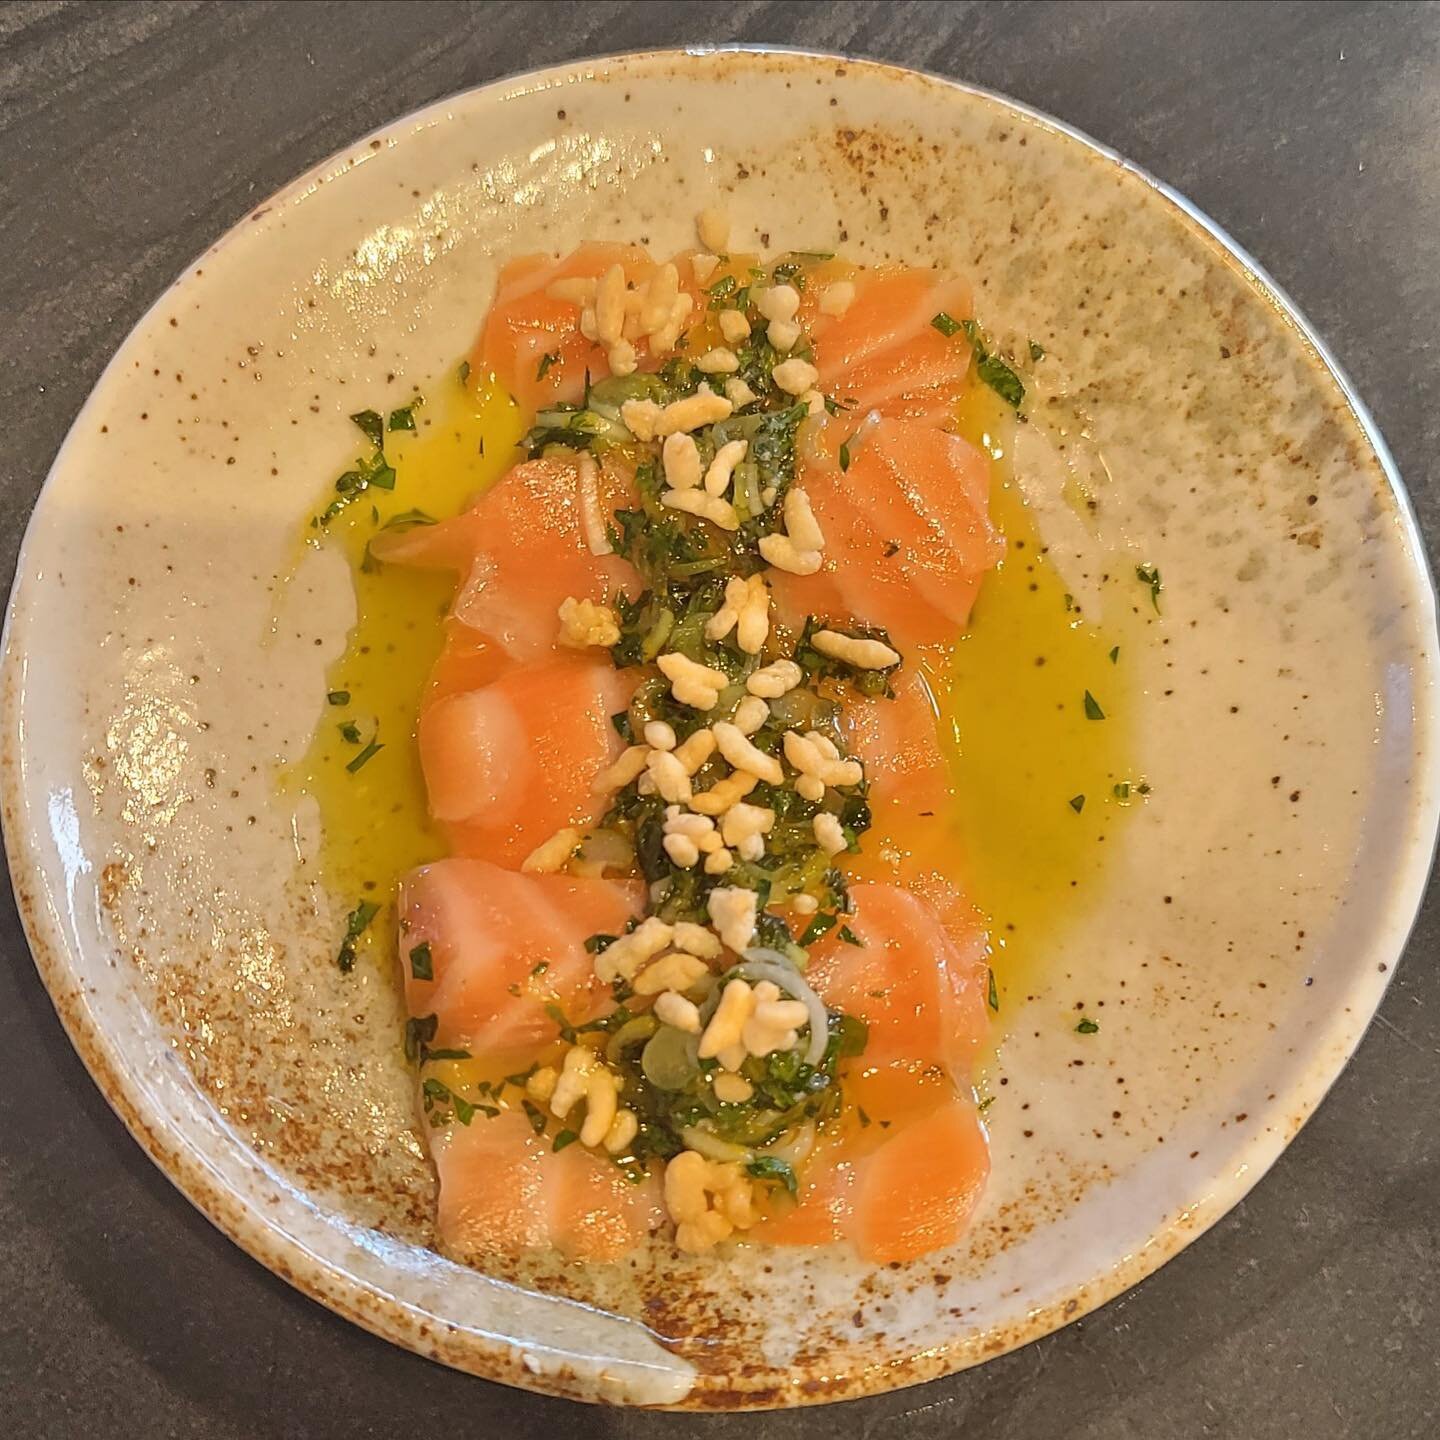 Welcome our new salmon sashimi dish!&nbsp;Japanese gremolata with puffed rice 🔥
.
.
.
.
.
#utahfoodie #japanesefood #utahcounty&nbsp;#wasatchcounty&nbsp;#hebercity&nbsp;#midwayutah&nbsp;#lehi #utahunique #utahbloggers #utahmoms #byu #provo #orem #sa